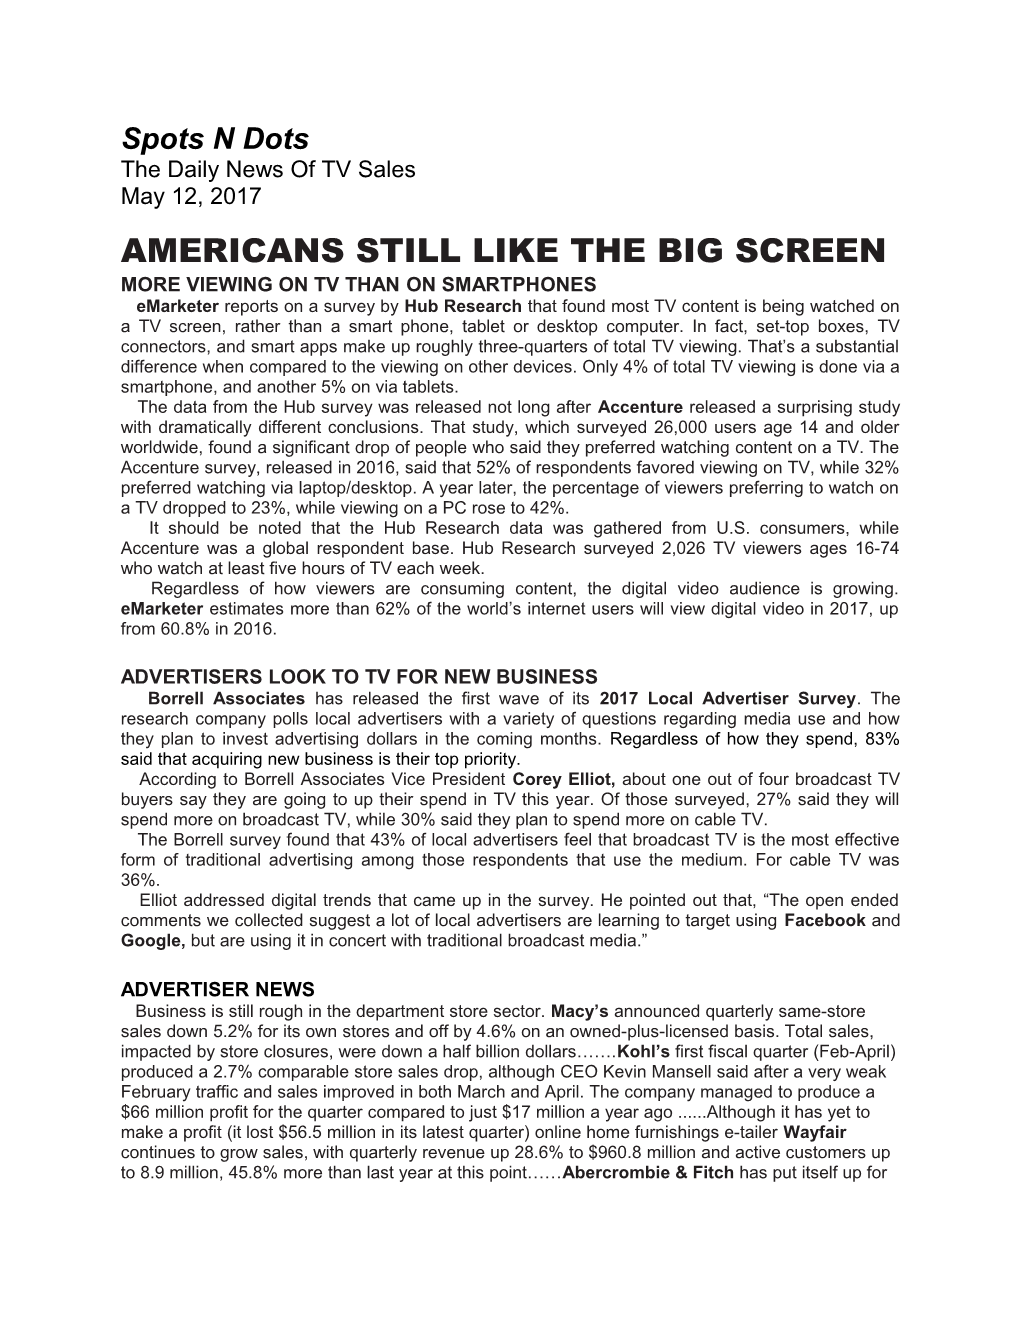 Americans Still Like the Big Screen